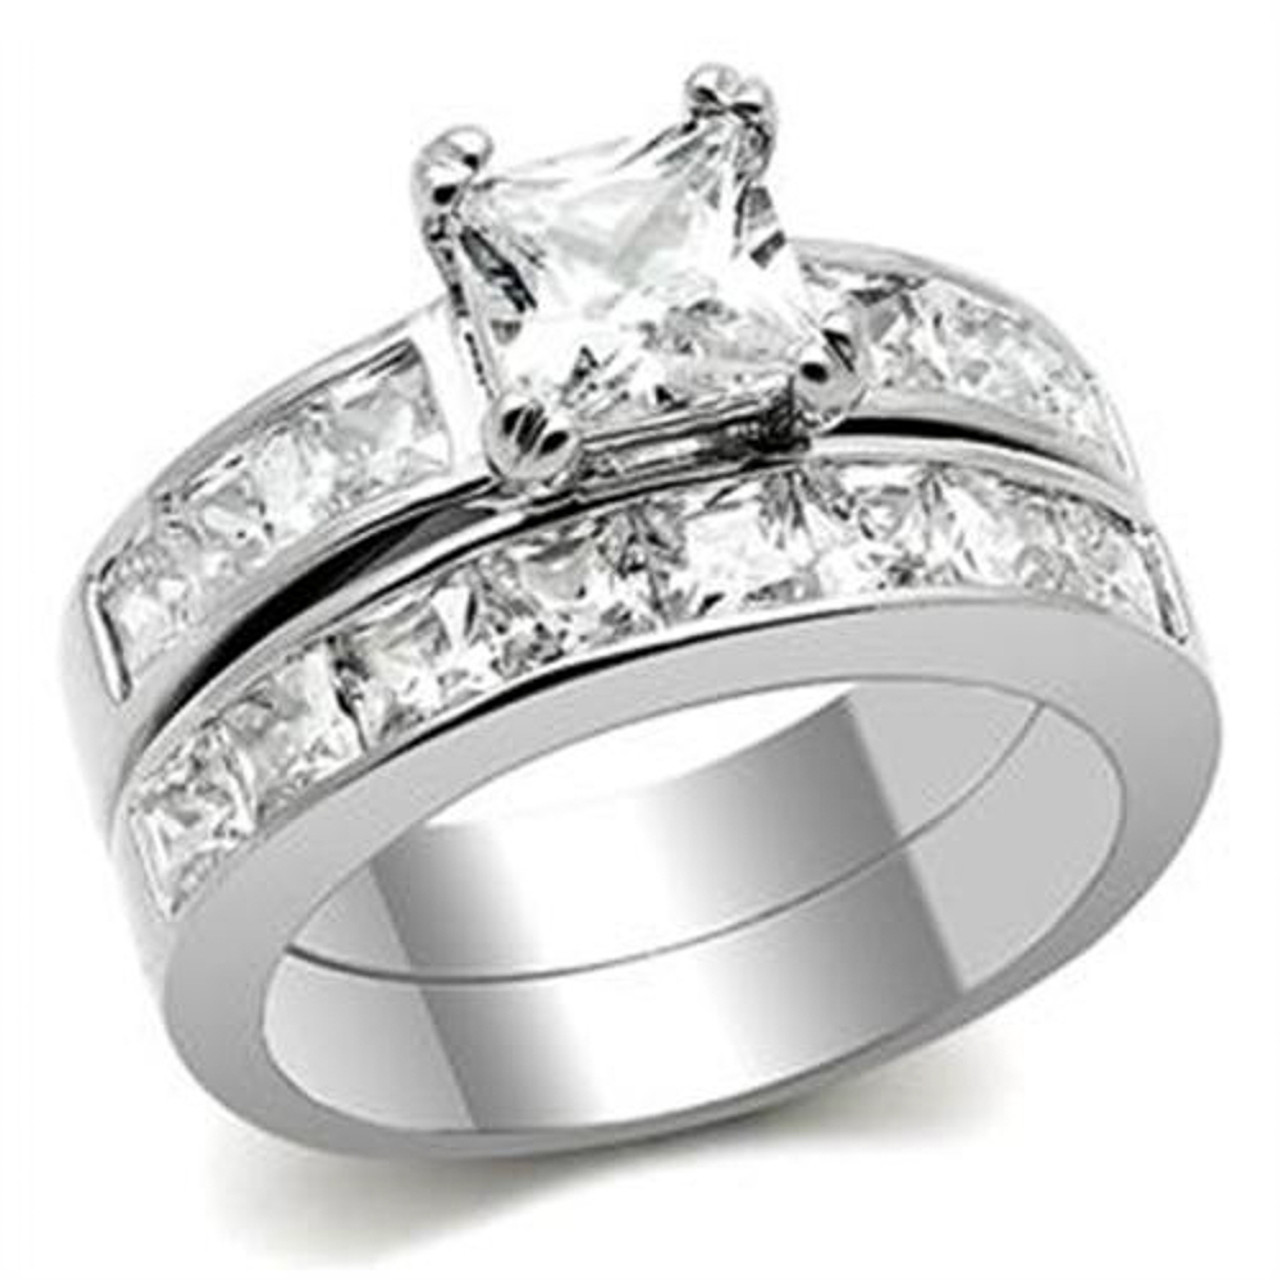 2.10 Ct Princess Cut AAA CZ 14k Gold Plated Wedding Ring Set Women's Size 5-10 